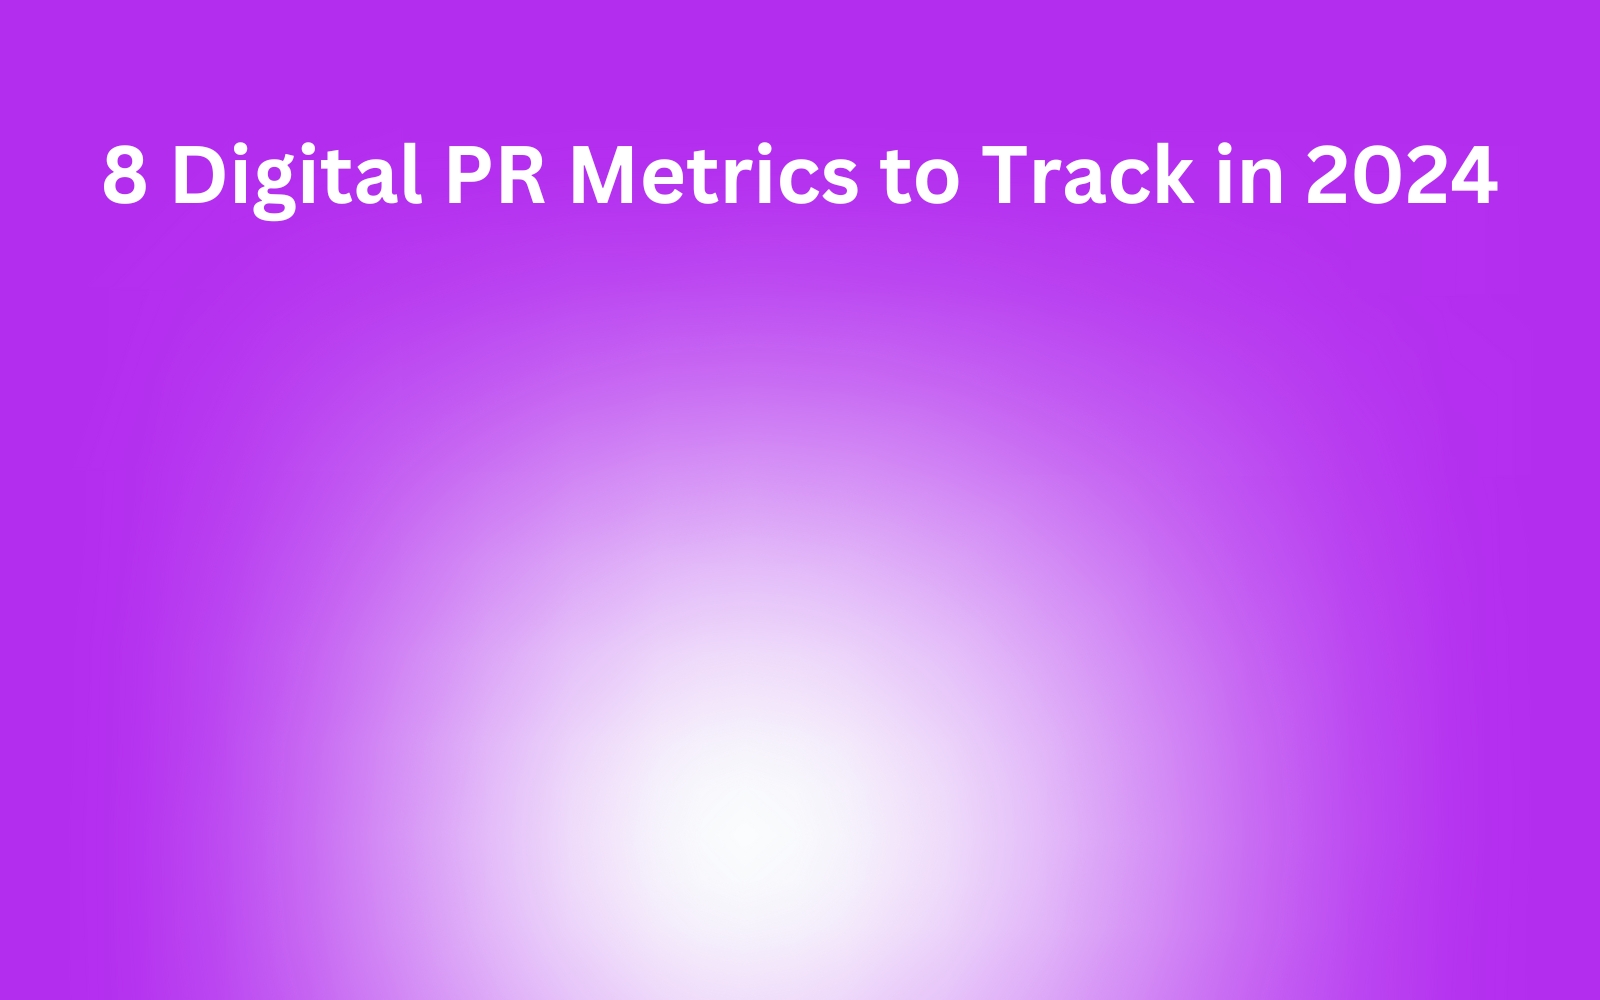 Digital PR Metrics